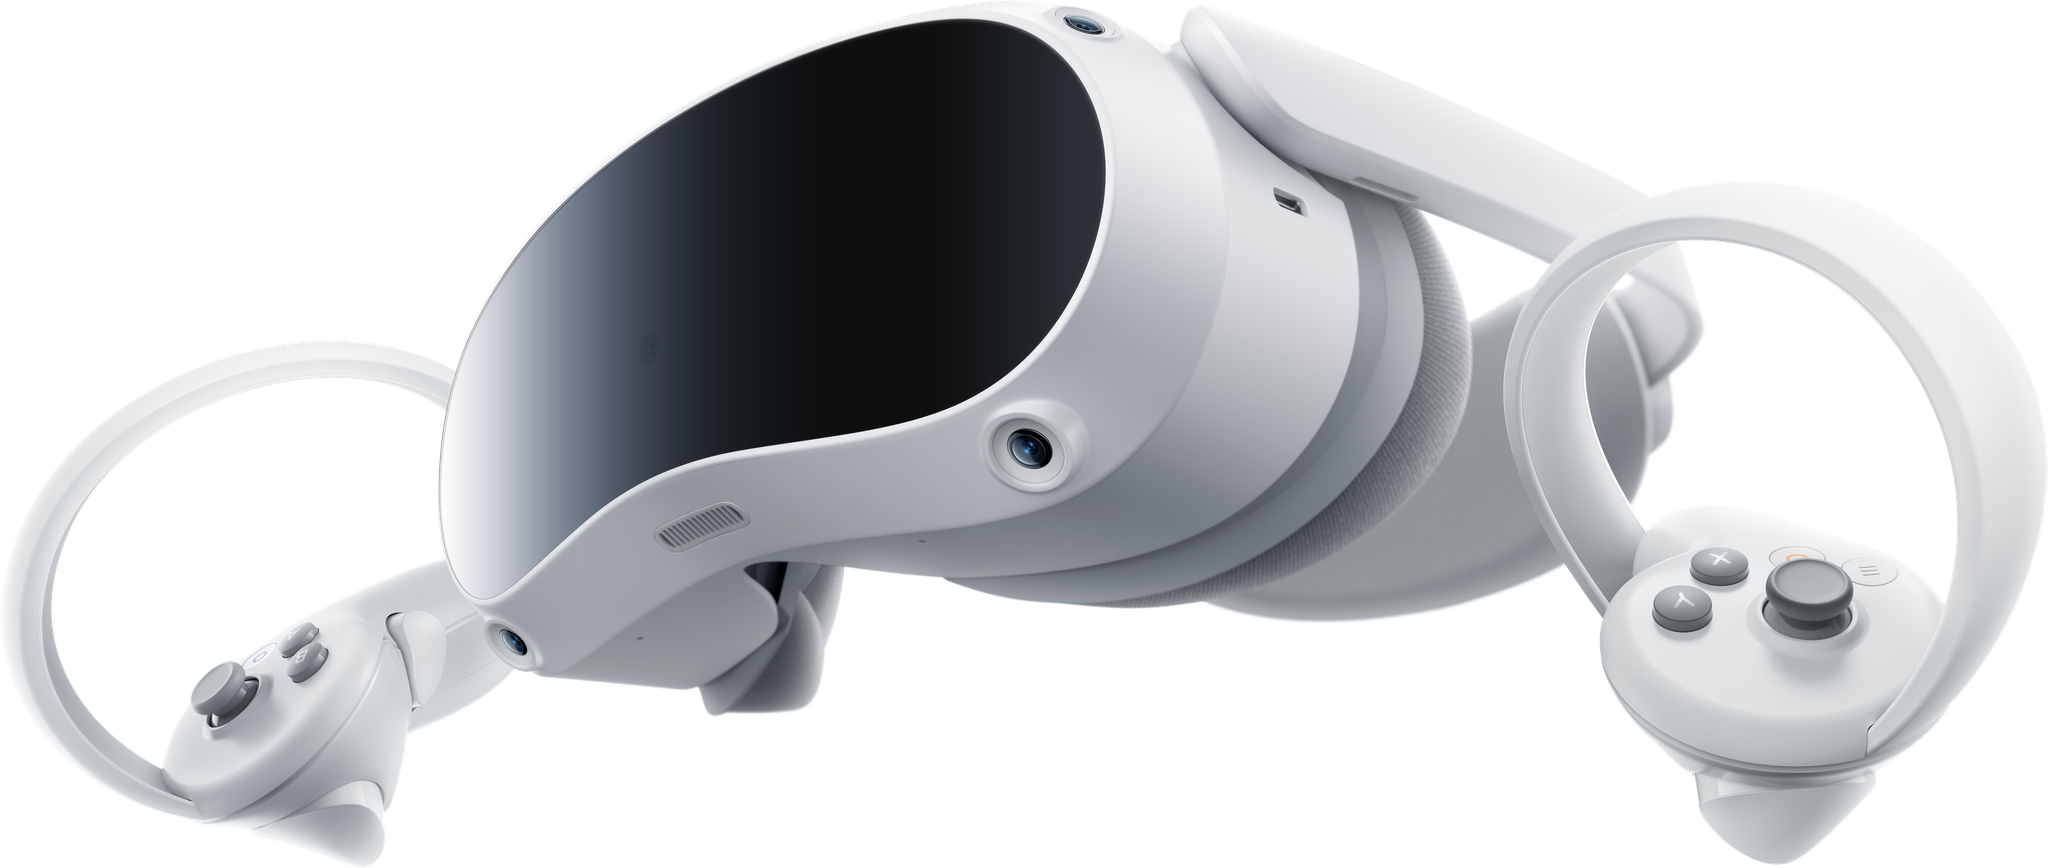 PICO 4 l’headset VR all-in-one leggero